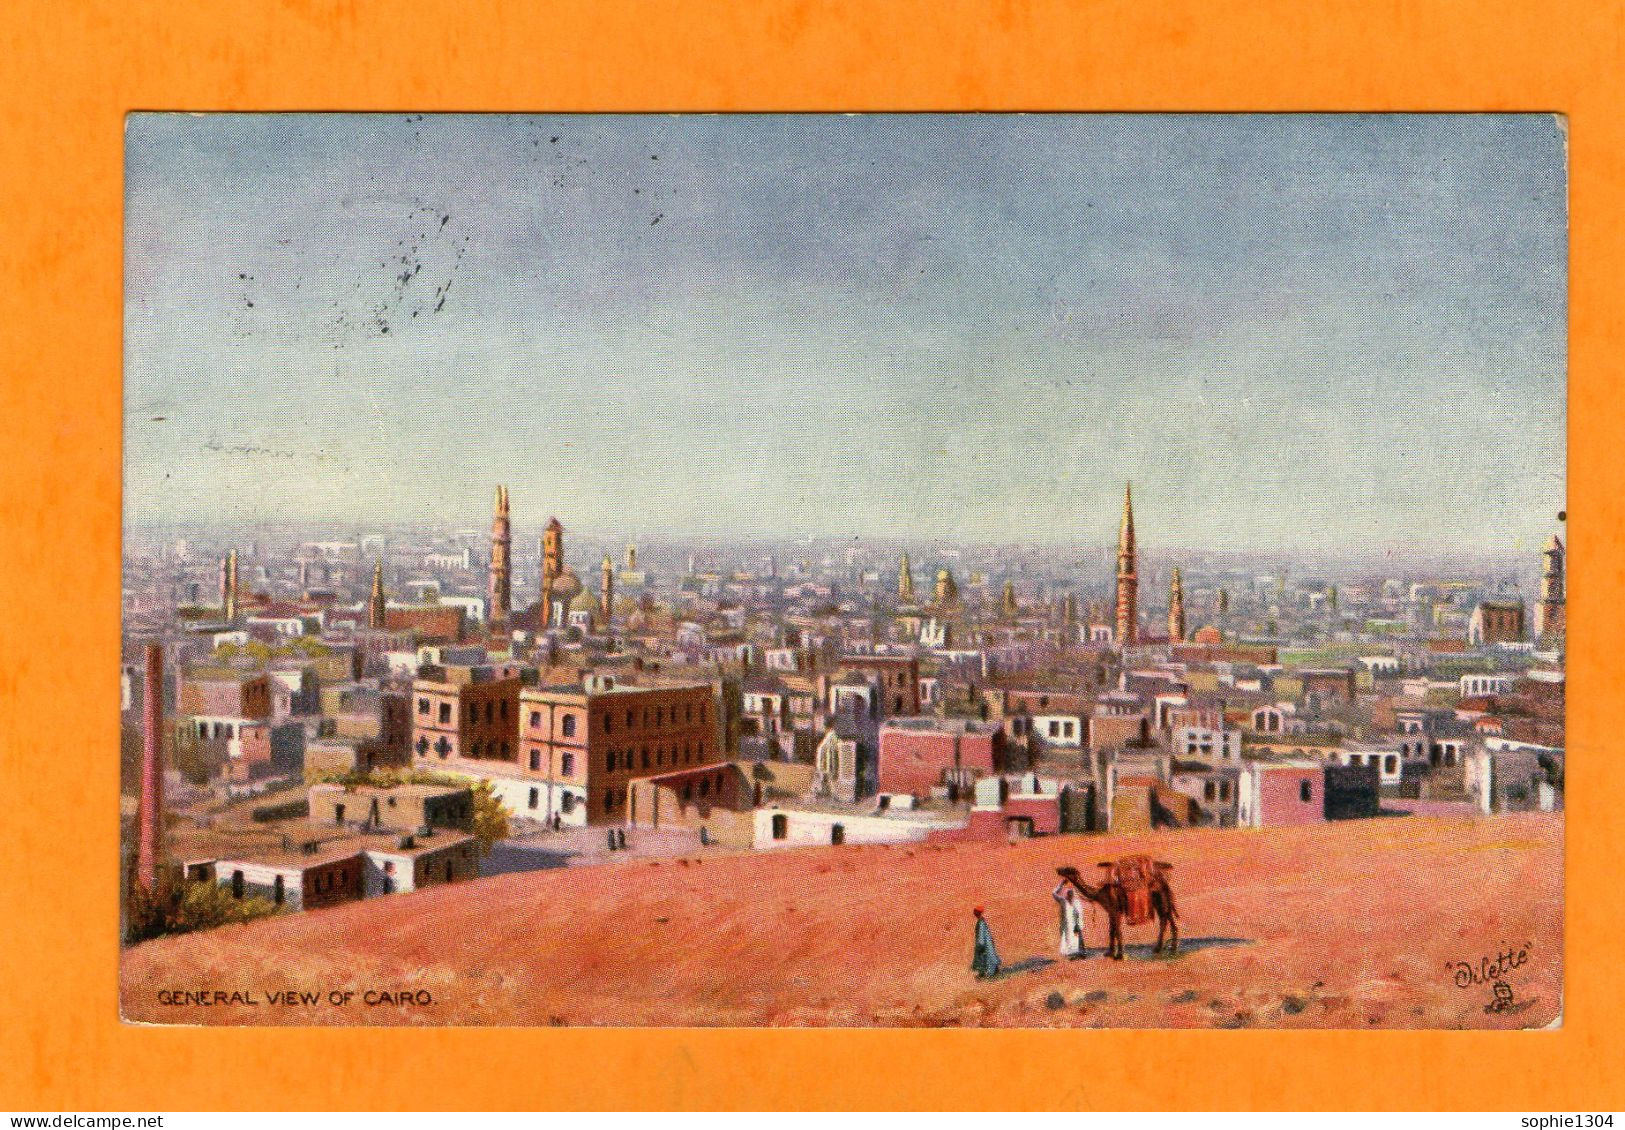 GENERAL VIEW OF CAIRO - (OILETTE) - Cairo